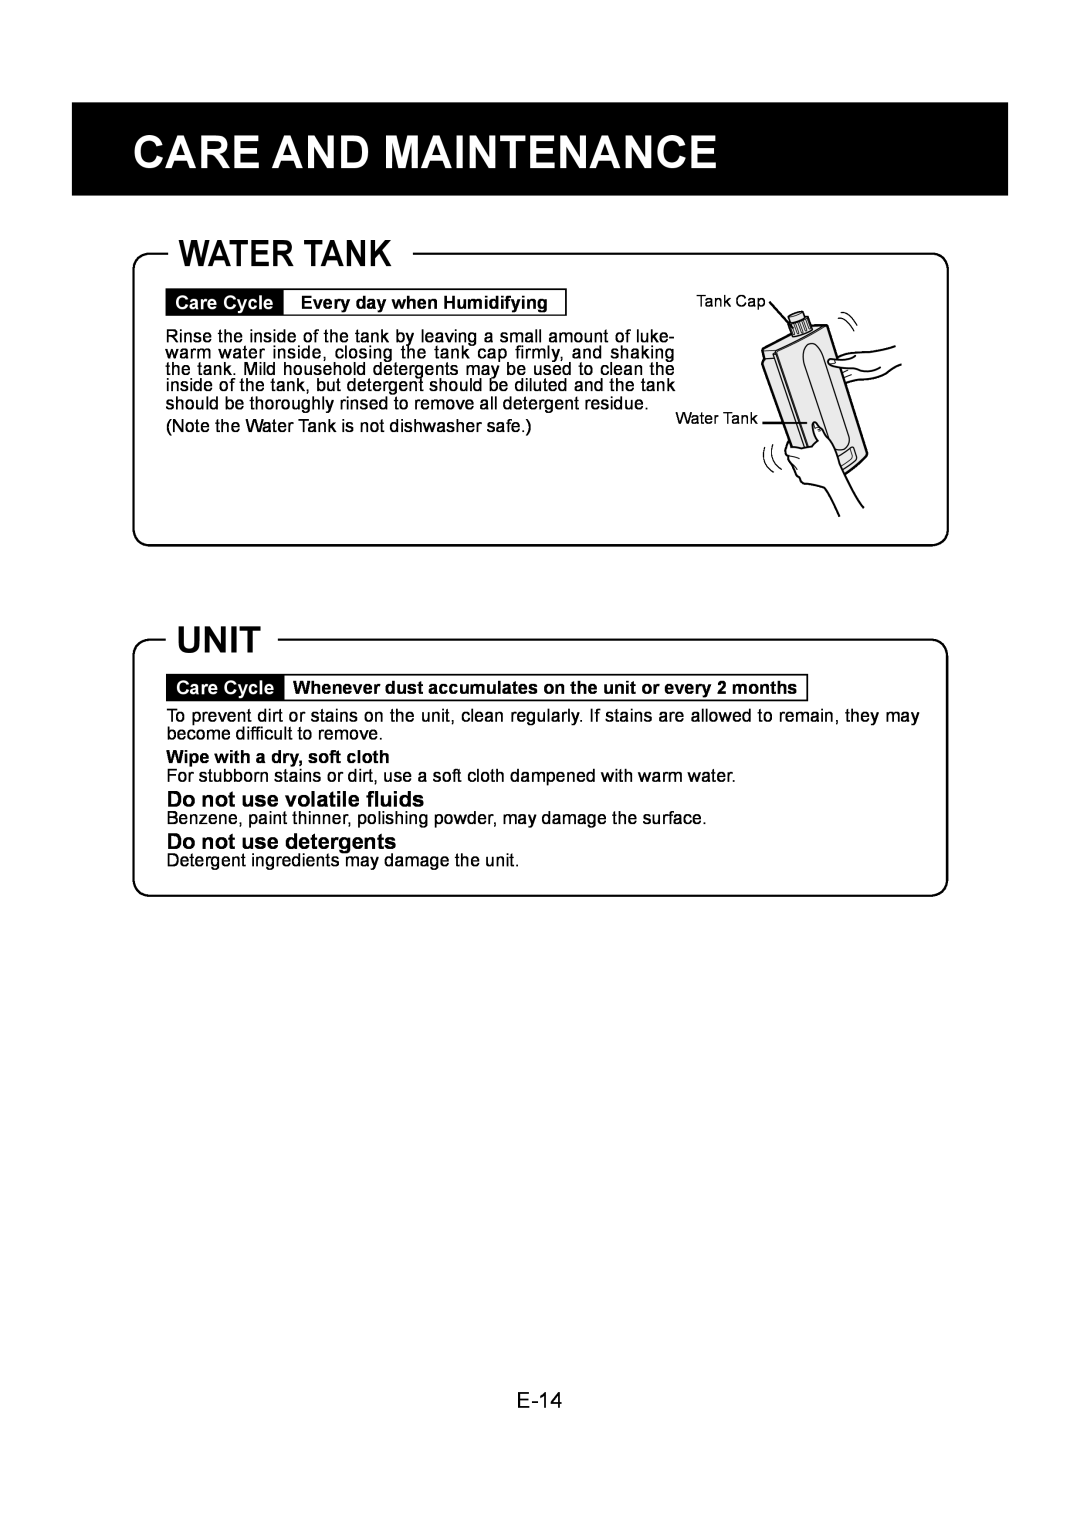 Sharp KC-830U operation manual Water Tank, Unit, E-14, Care And Maintenance, Care Cycle 